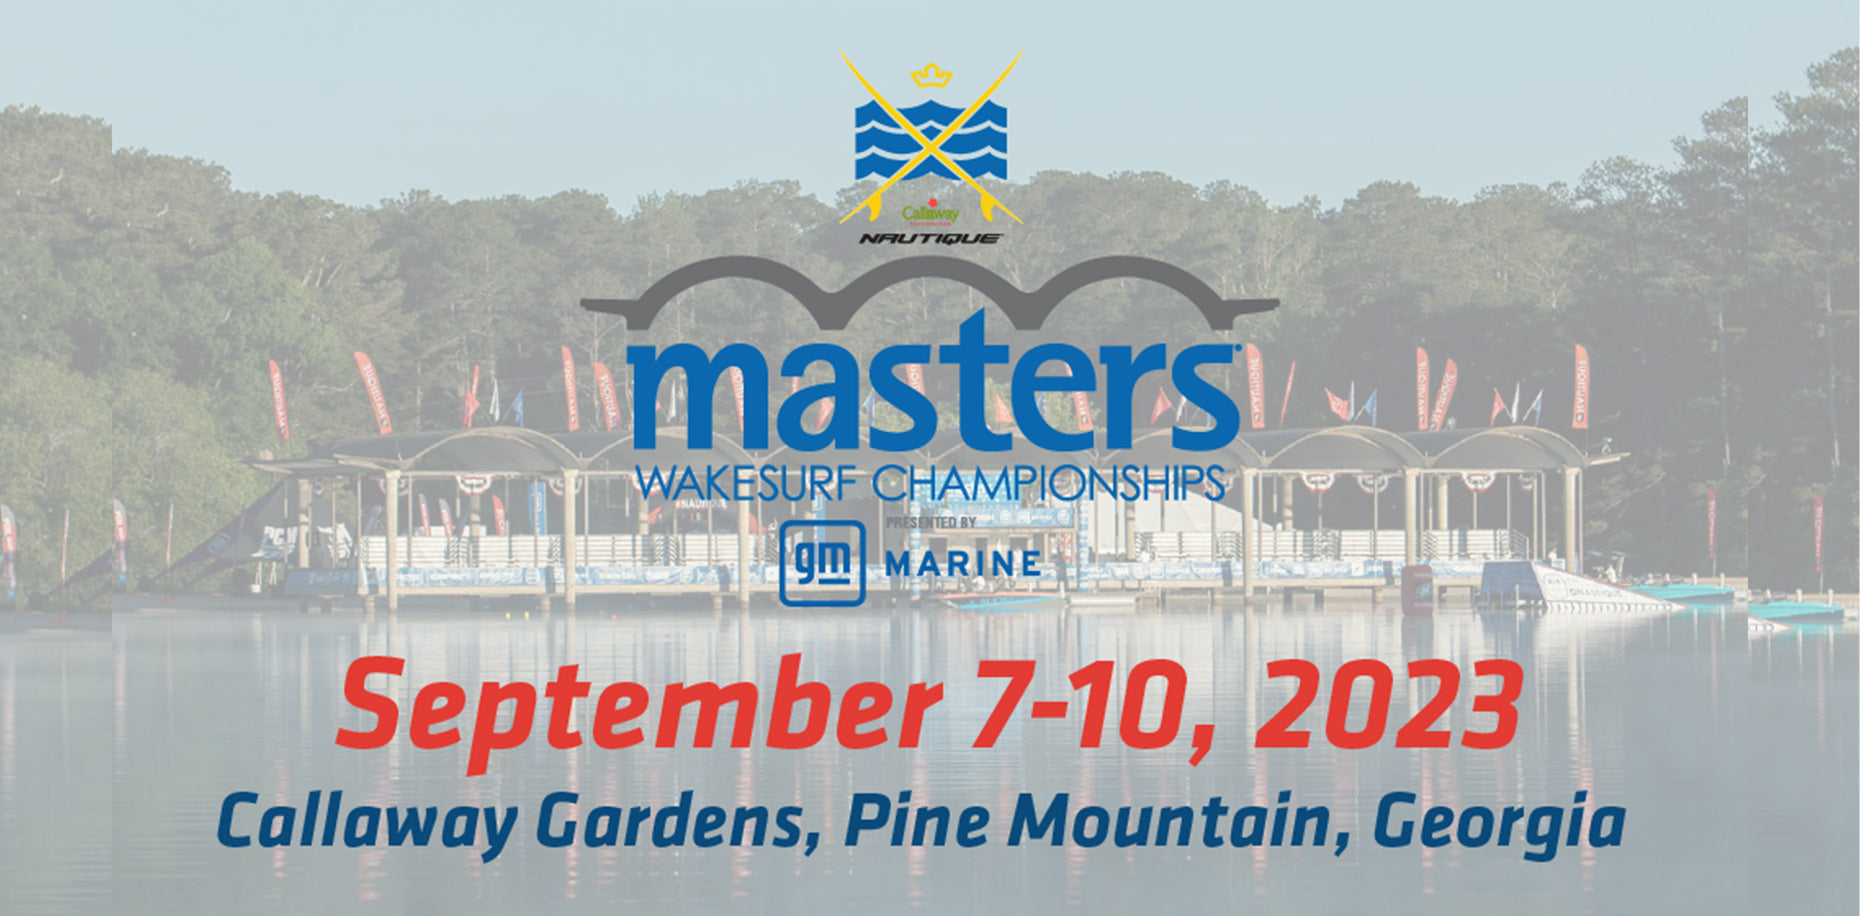 The 2023 Masters Wakesurf Championships